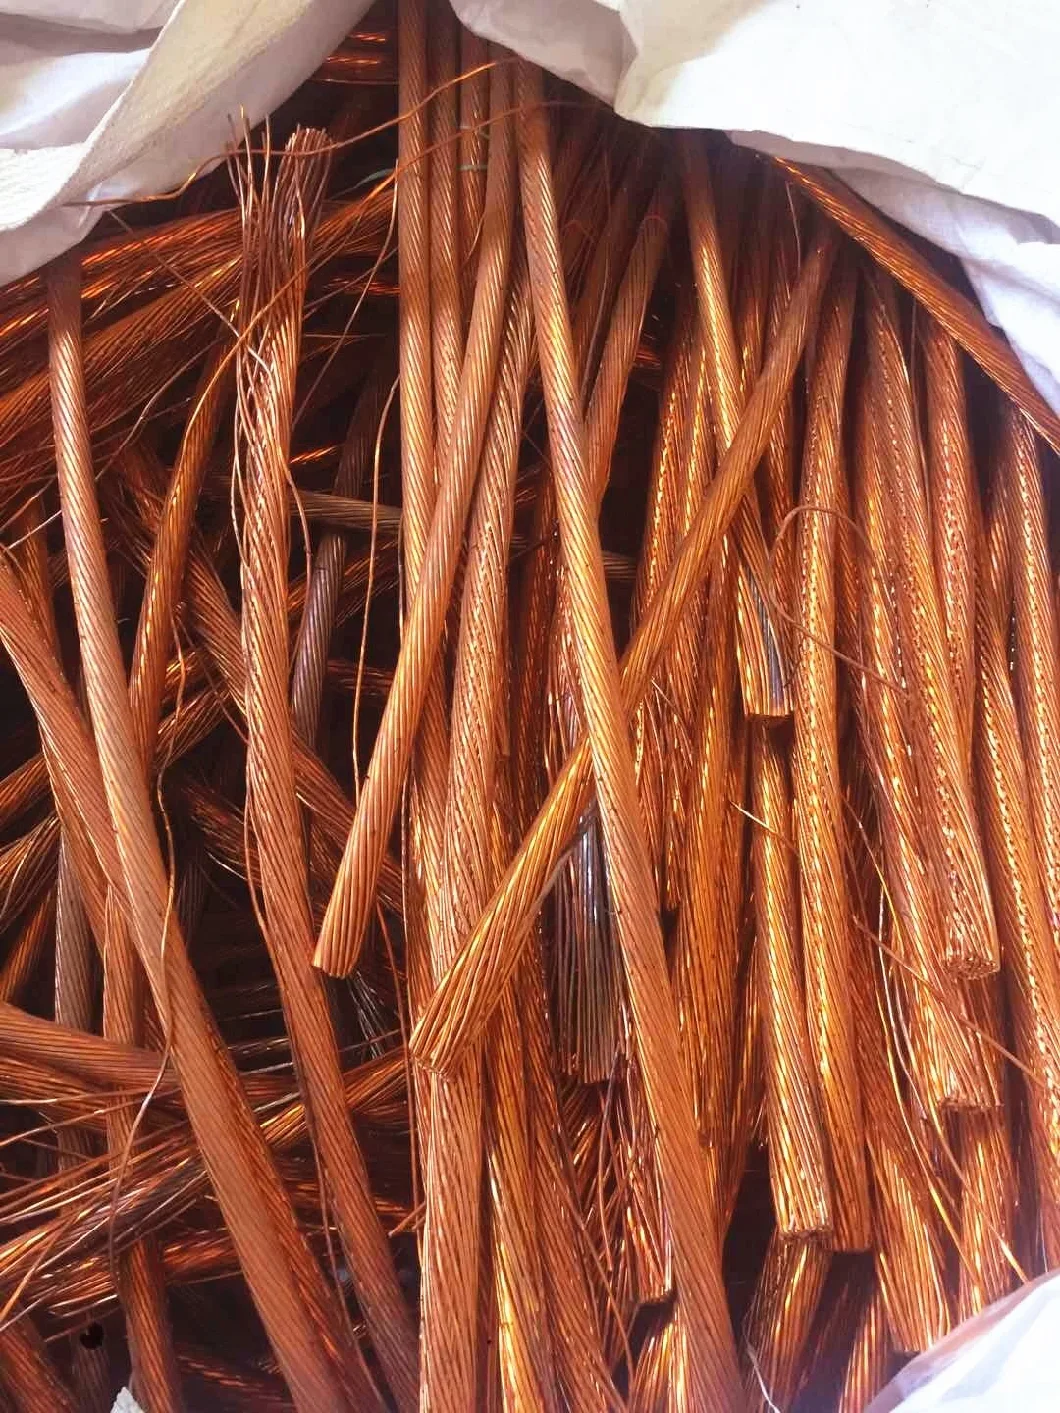 Sale Copper Scrap Copper Wire Scrap Bare Bright Copper Scrap Wire 99.99% Made in China